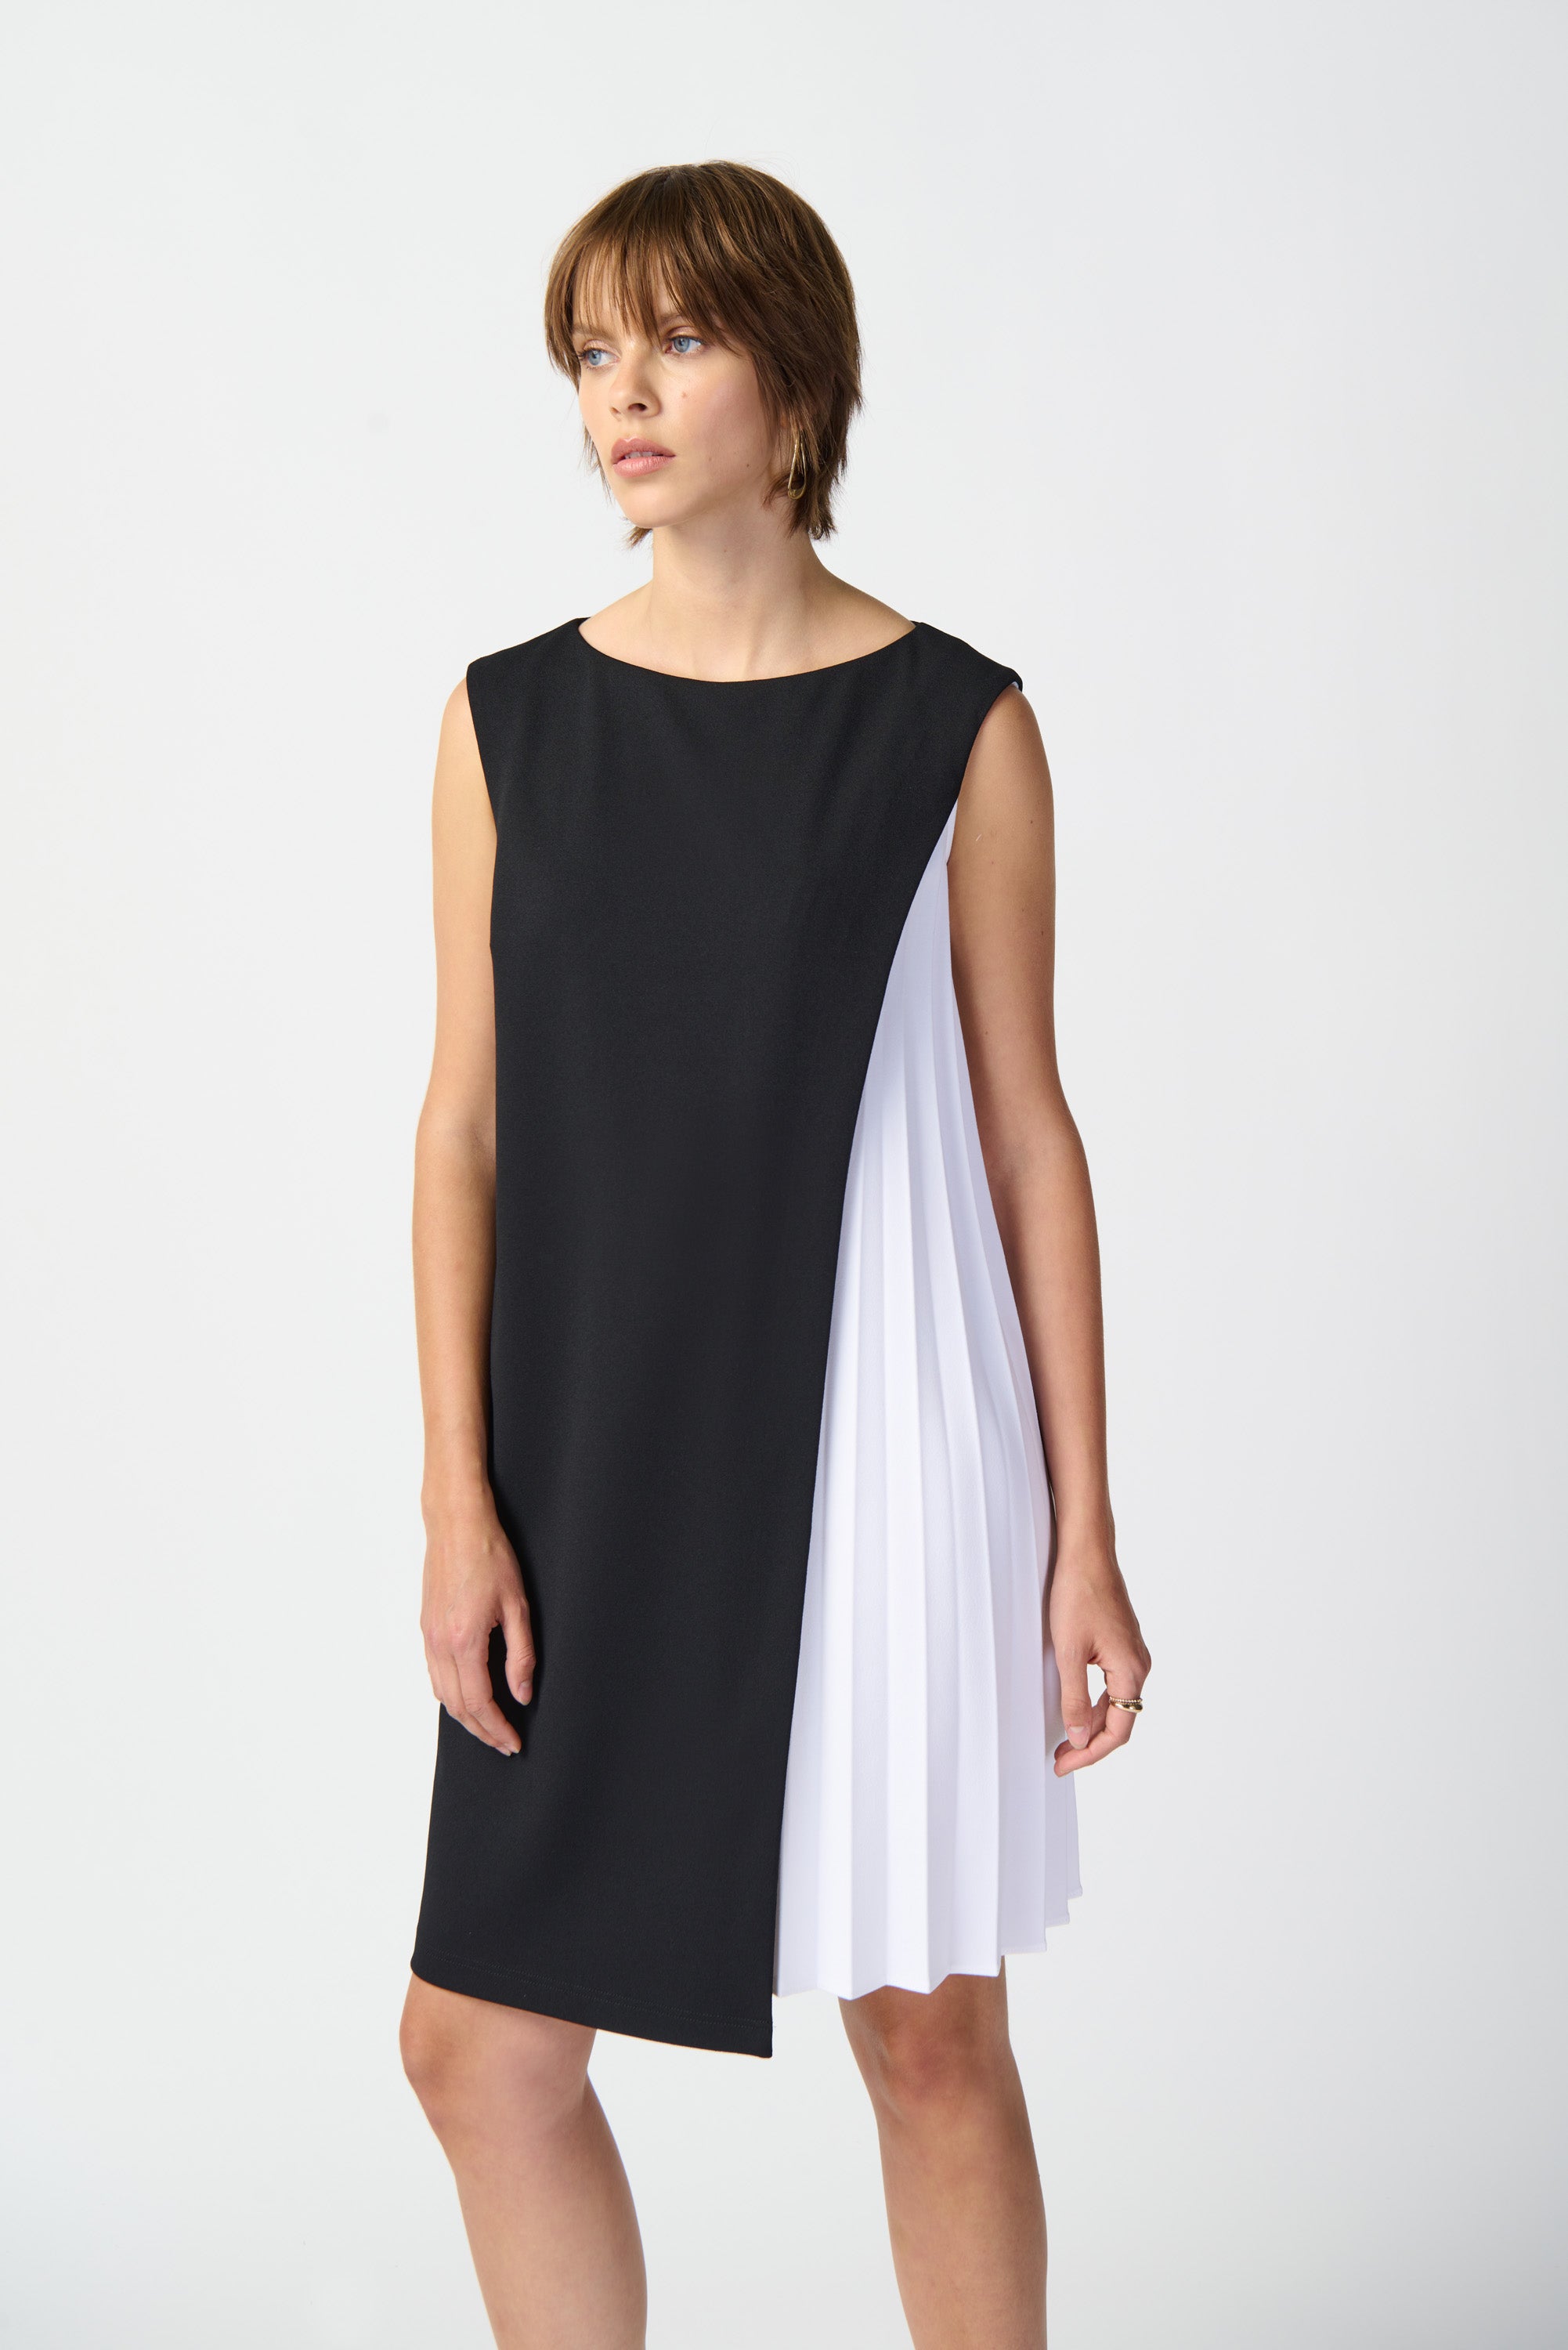 Joseph Ribkoff Black/Multi Geometric Print Dress Style 241162